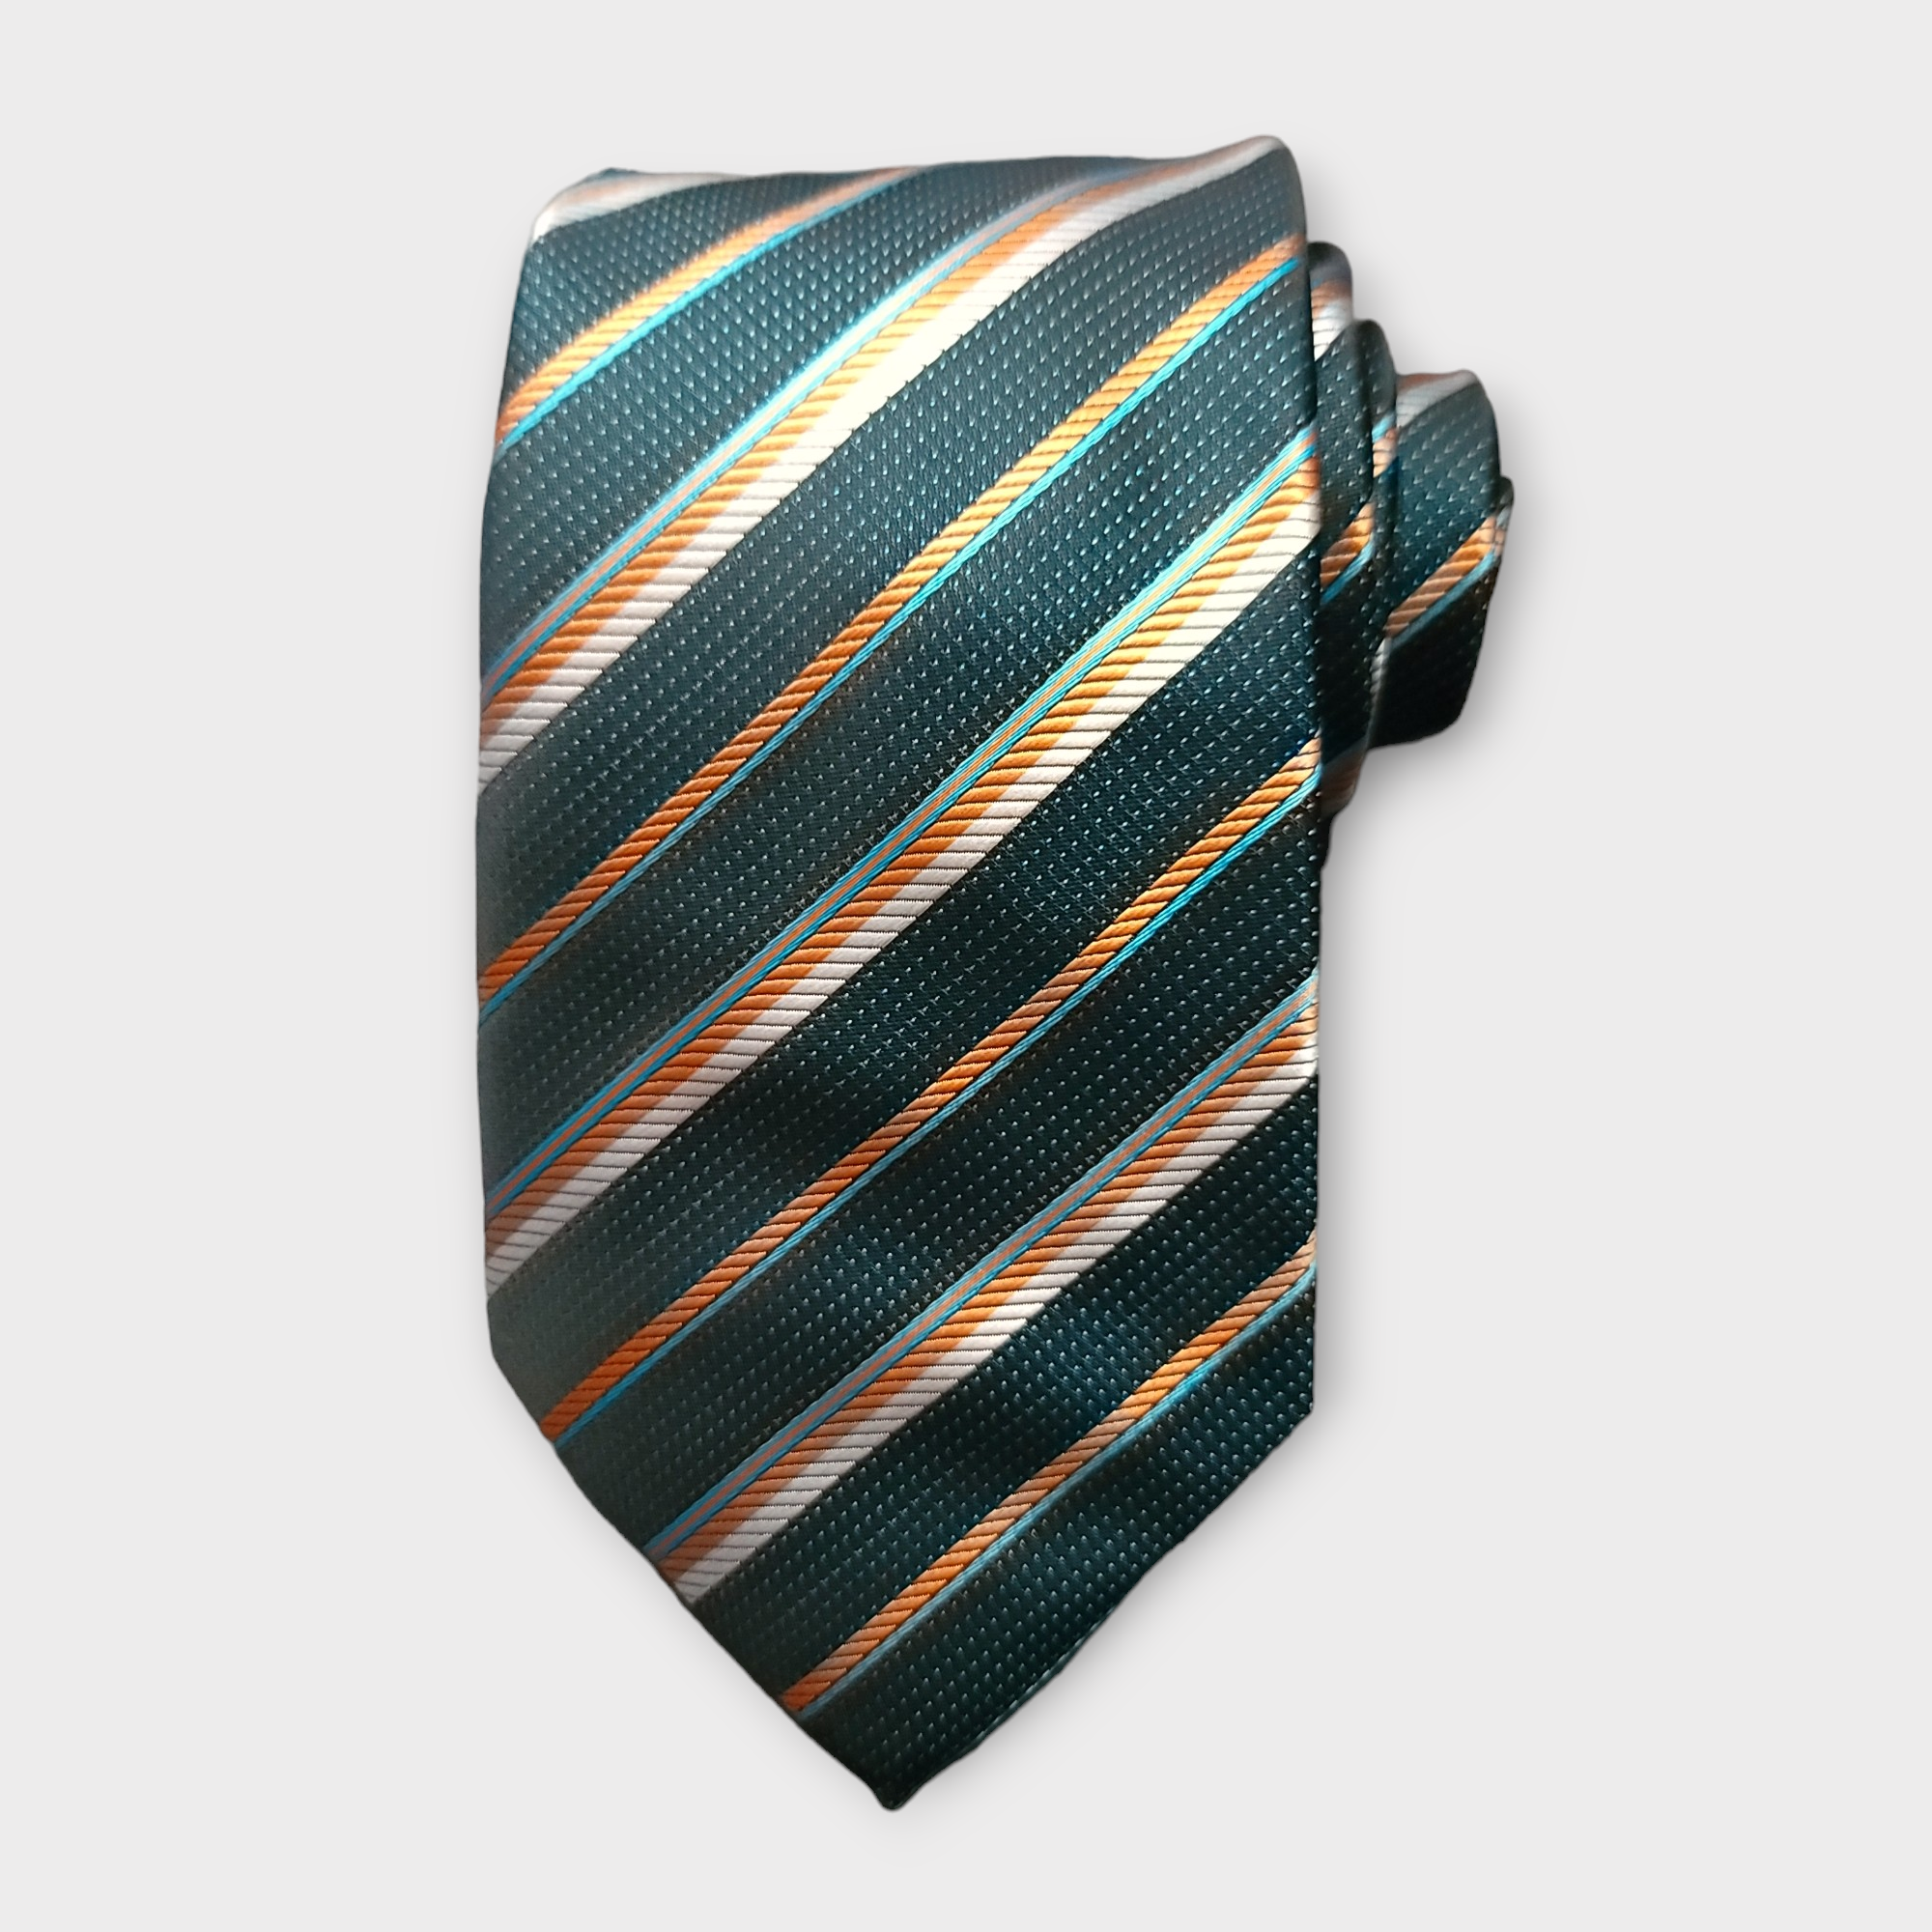 Black Teal Striped Silk Tie Pocket Square Cufflink Set